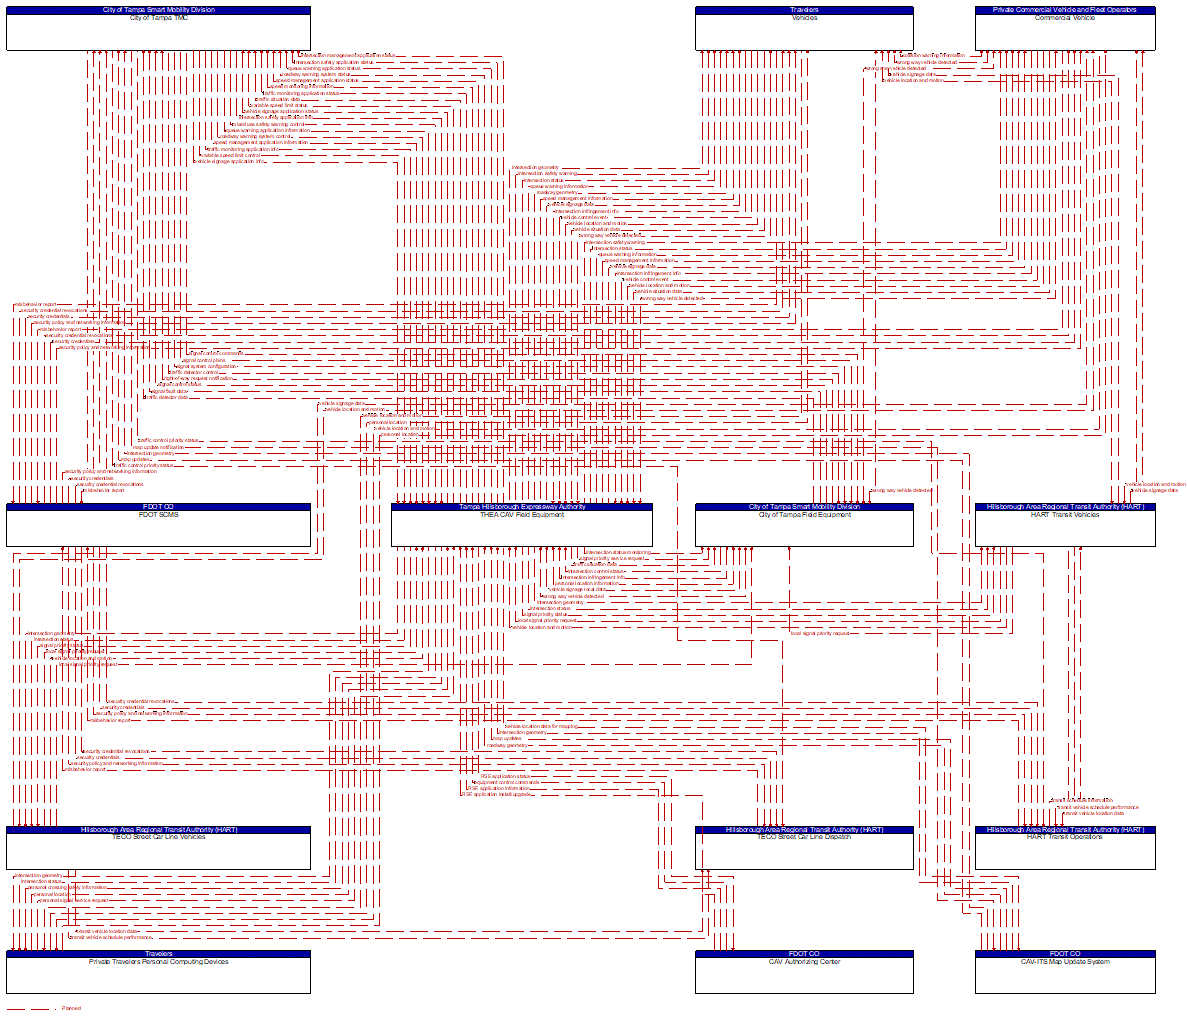 Project Information Flow Diagram: Pinellas Suncoast Transit Authority